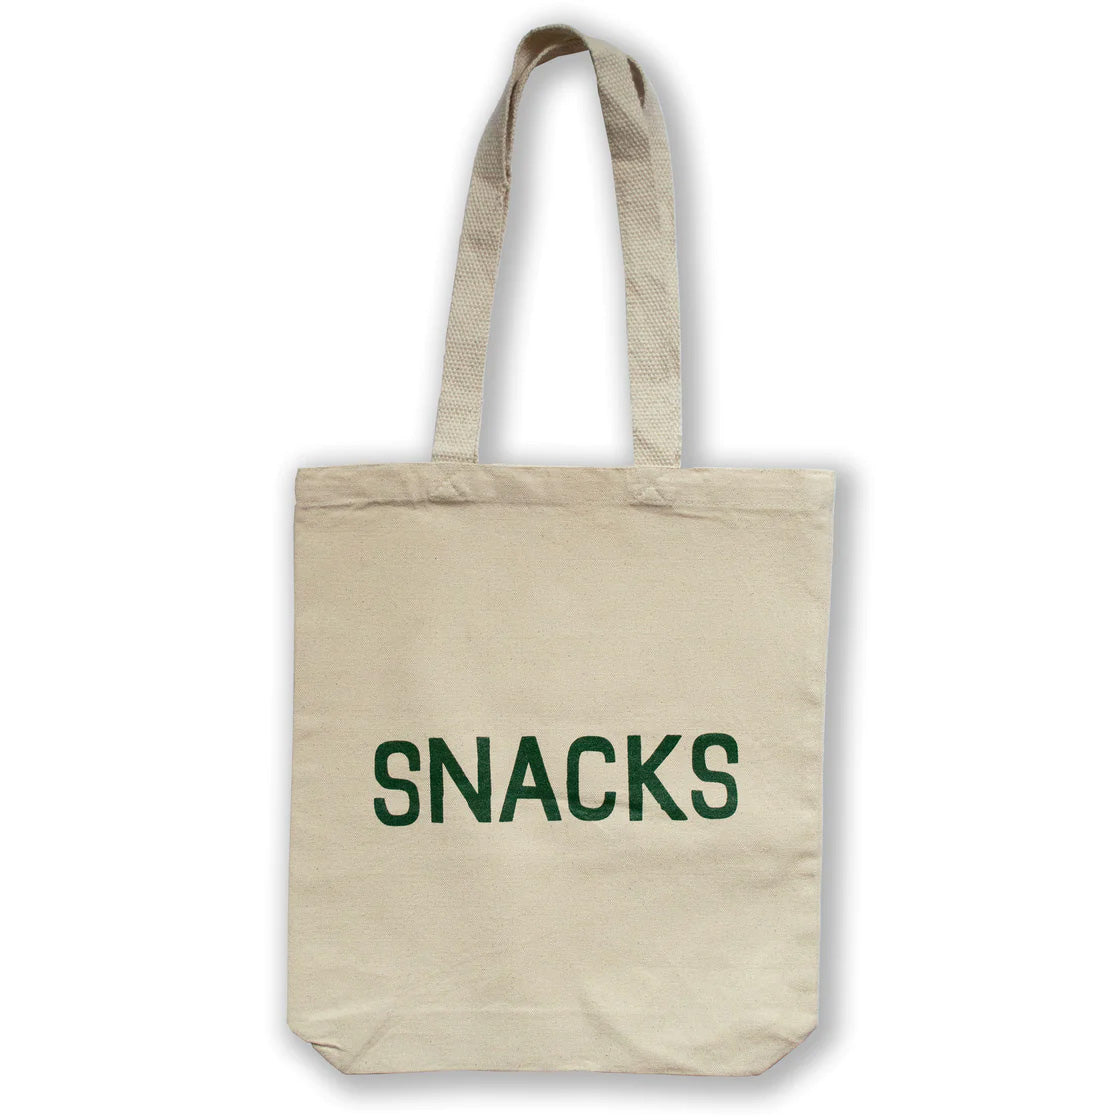 Snacks Tote Bag by Banquet Workshop